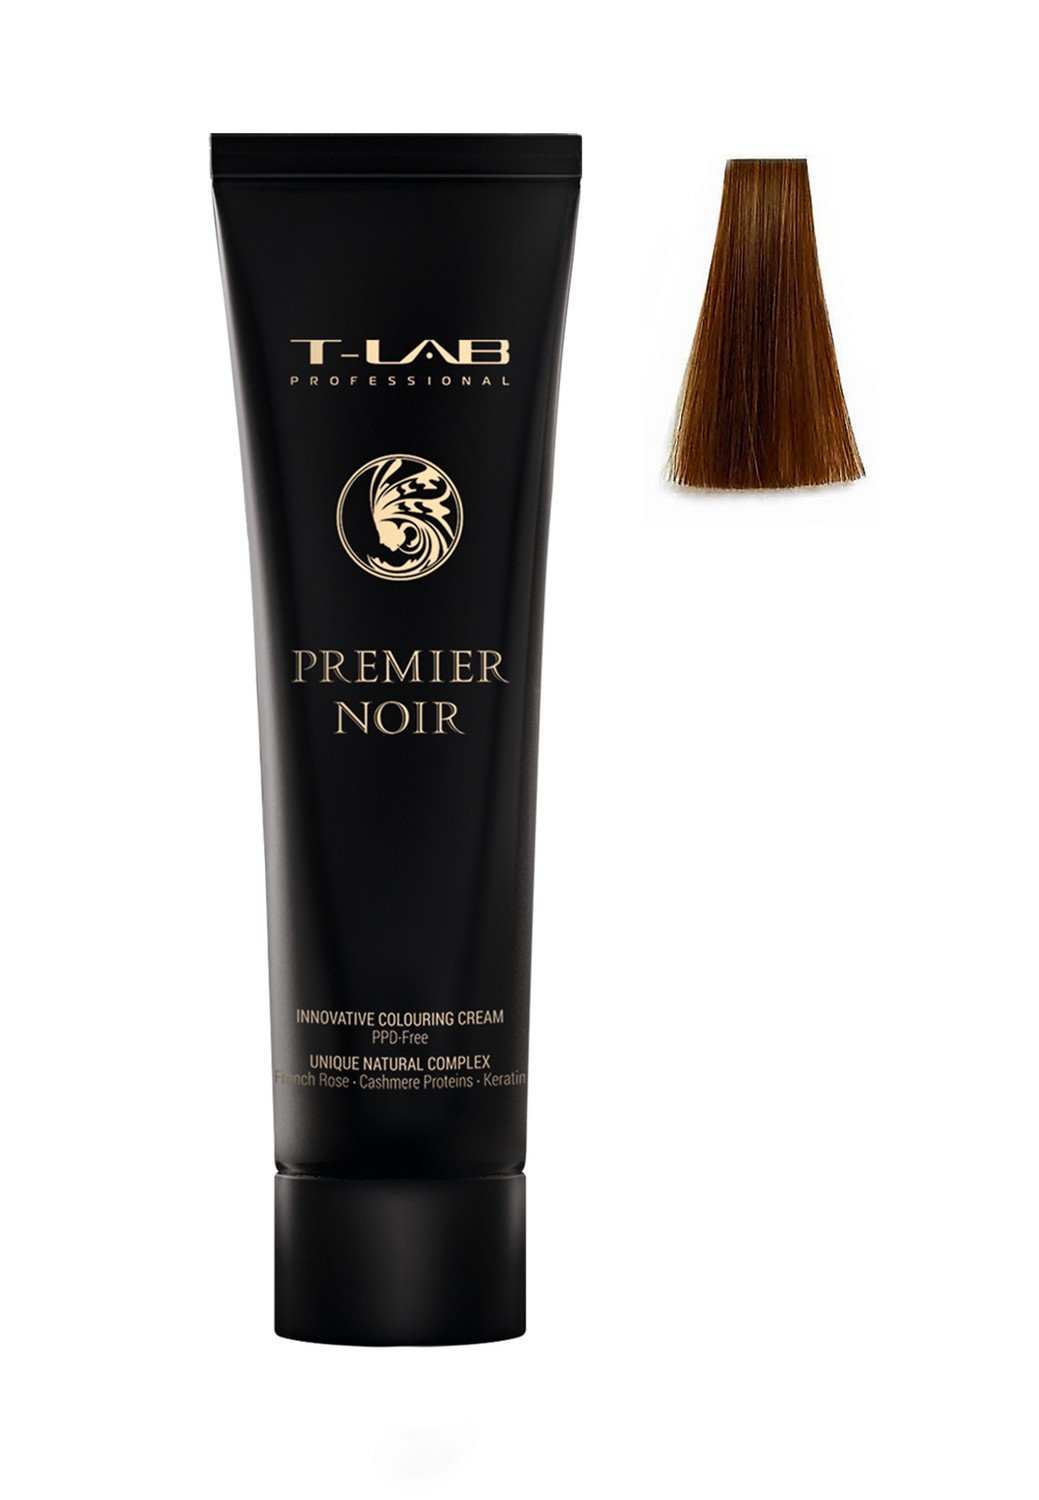 Крем-краска T-LAB Professional Premier Noir colouring cream, оттенок 7.35 (golden mahogany blonde) - фото 2